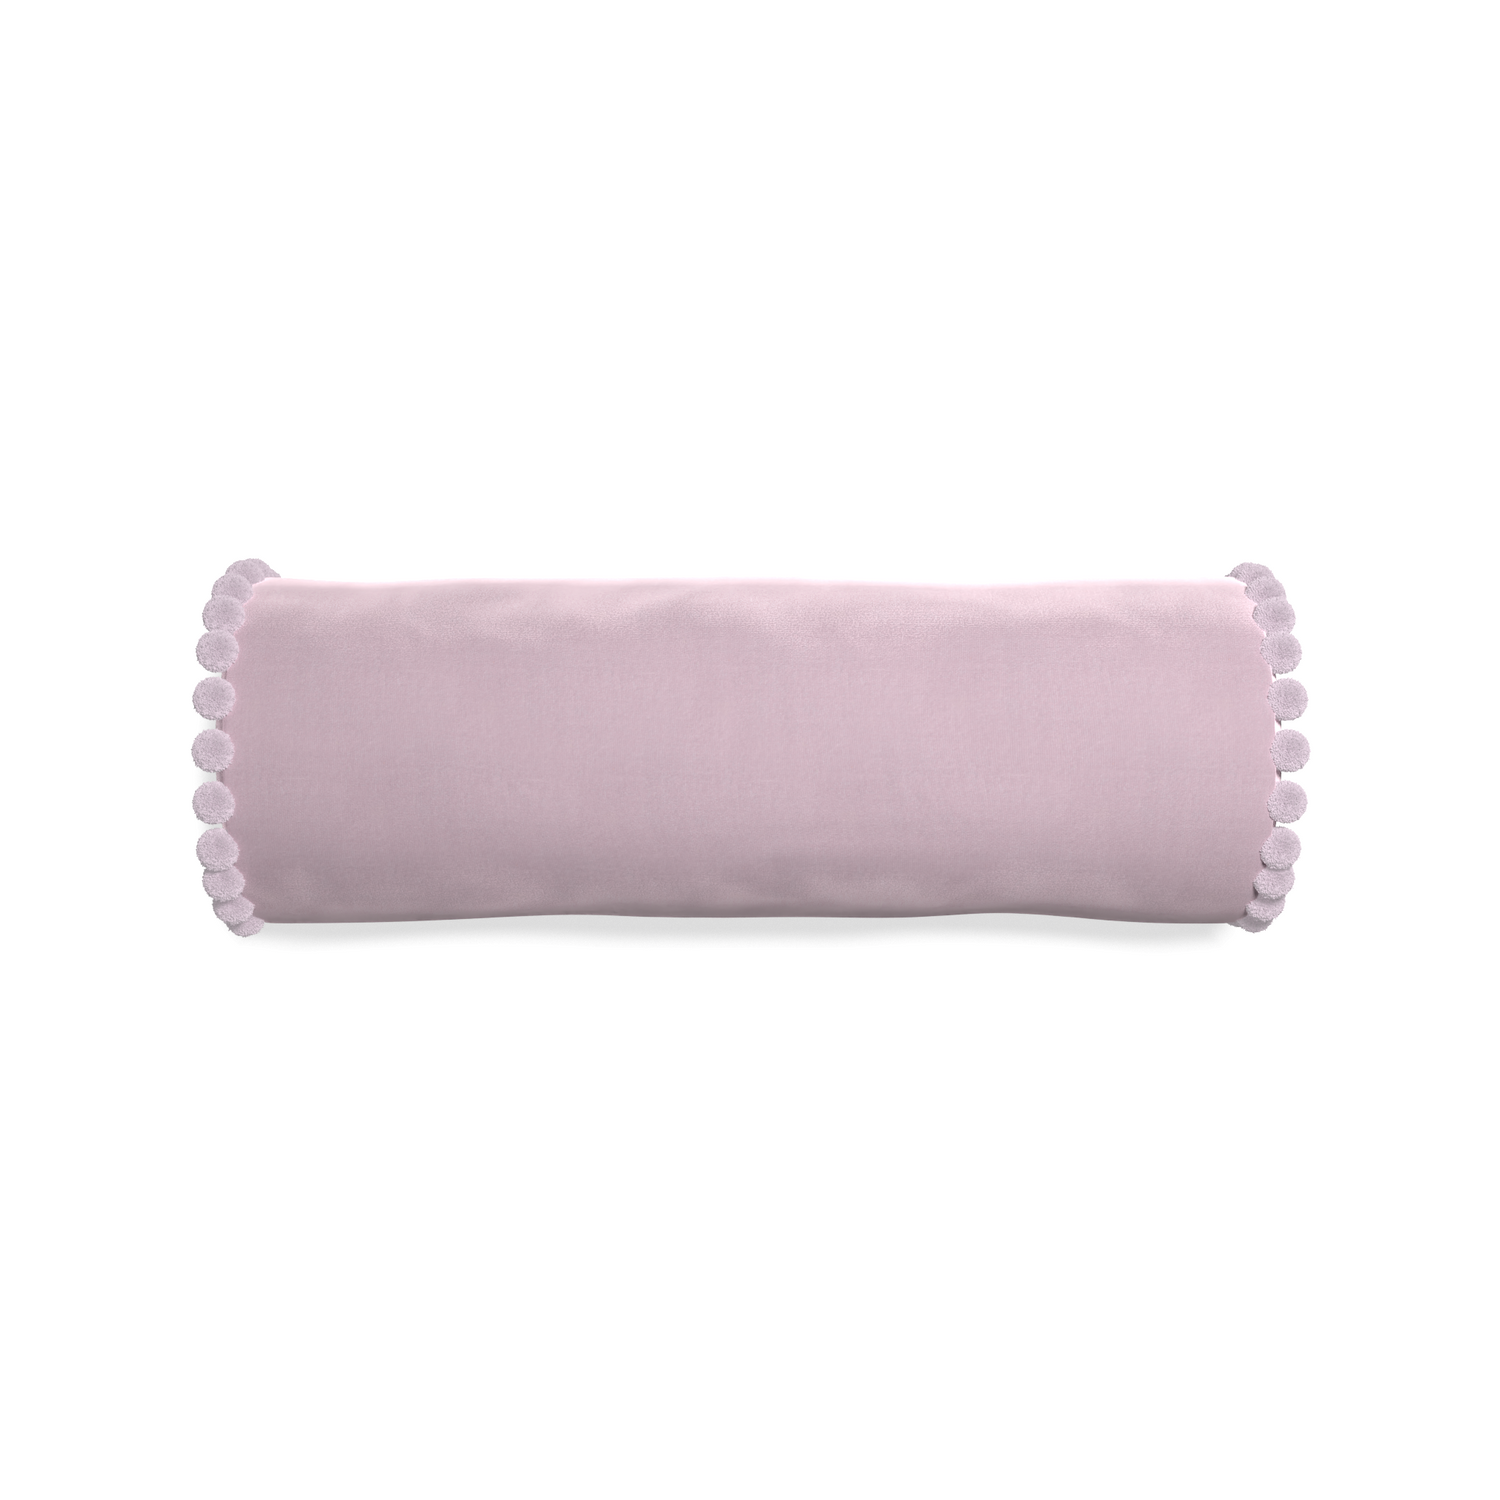 bolster lilac velvet pillow with lilac pom poms